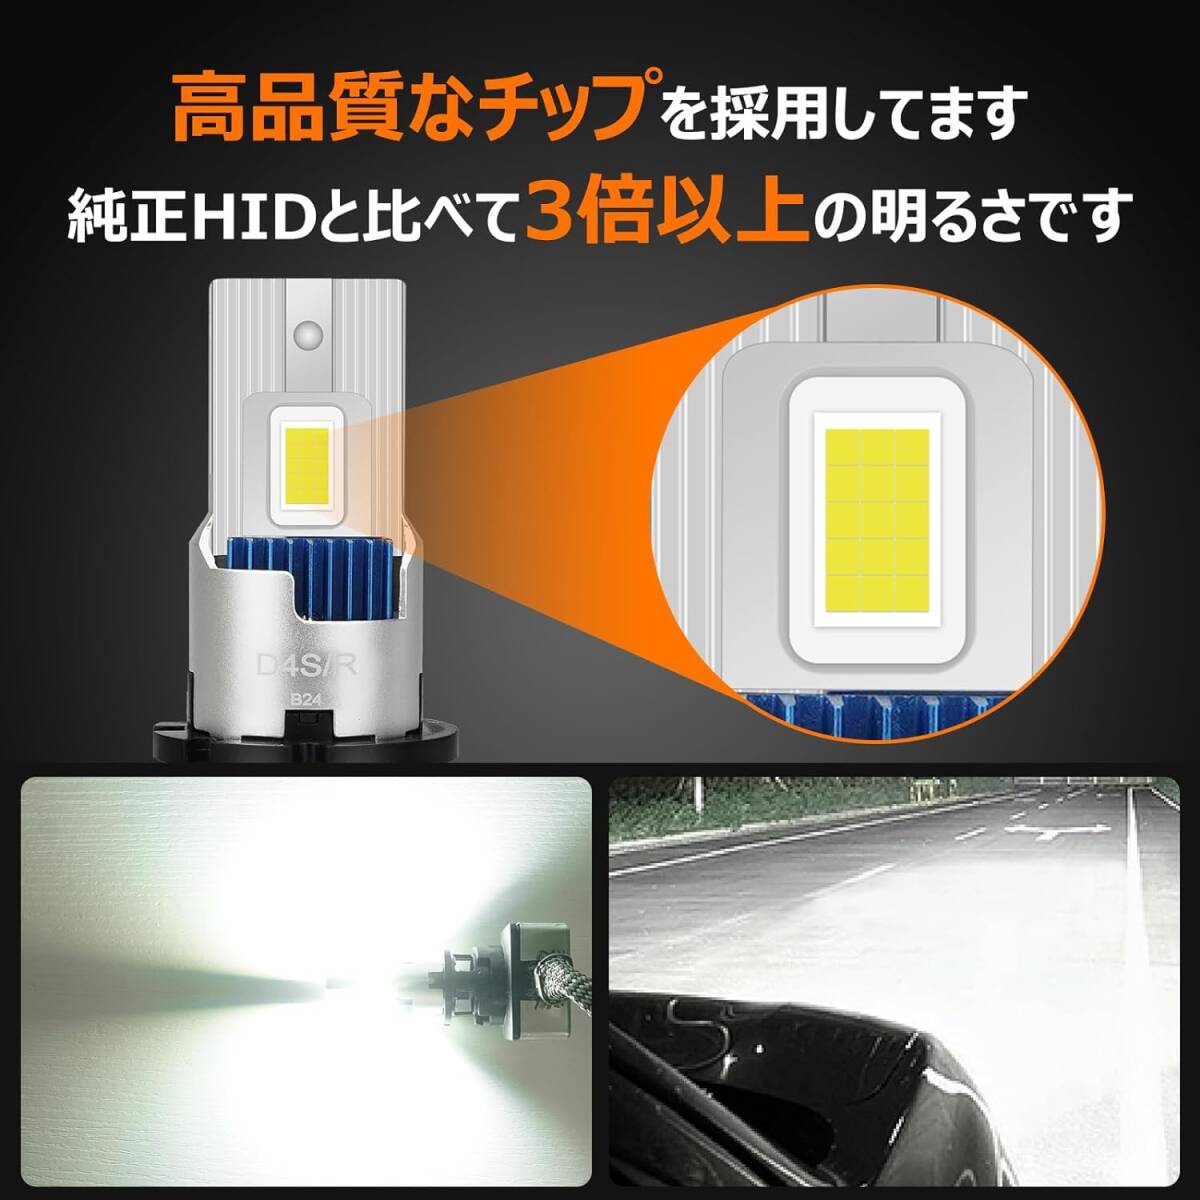 1 иен старт!pon установка D2S D2R D4S D4R LED передняя фара . свет соответствующий требованиям техосмотра 35W 12V тихий звук с вентилятором 6500k LED.LED клапан(лампа) 2 шт. комплект 